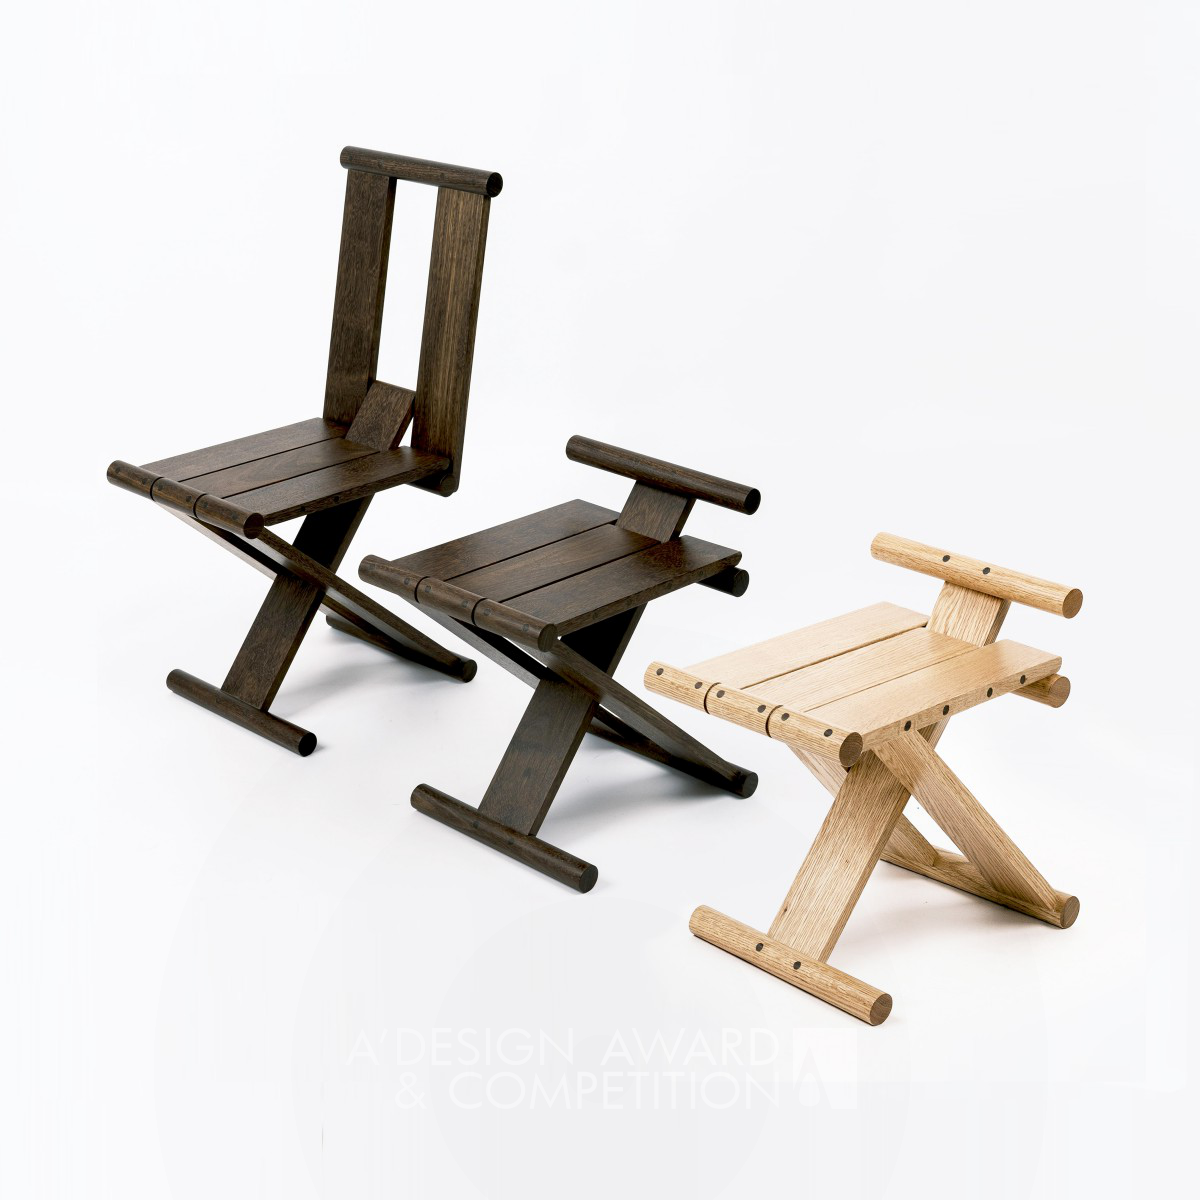 Miguel Arruda wins Bronze at the prestigious A' Furniture Design Award with Golf Folding Chair.